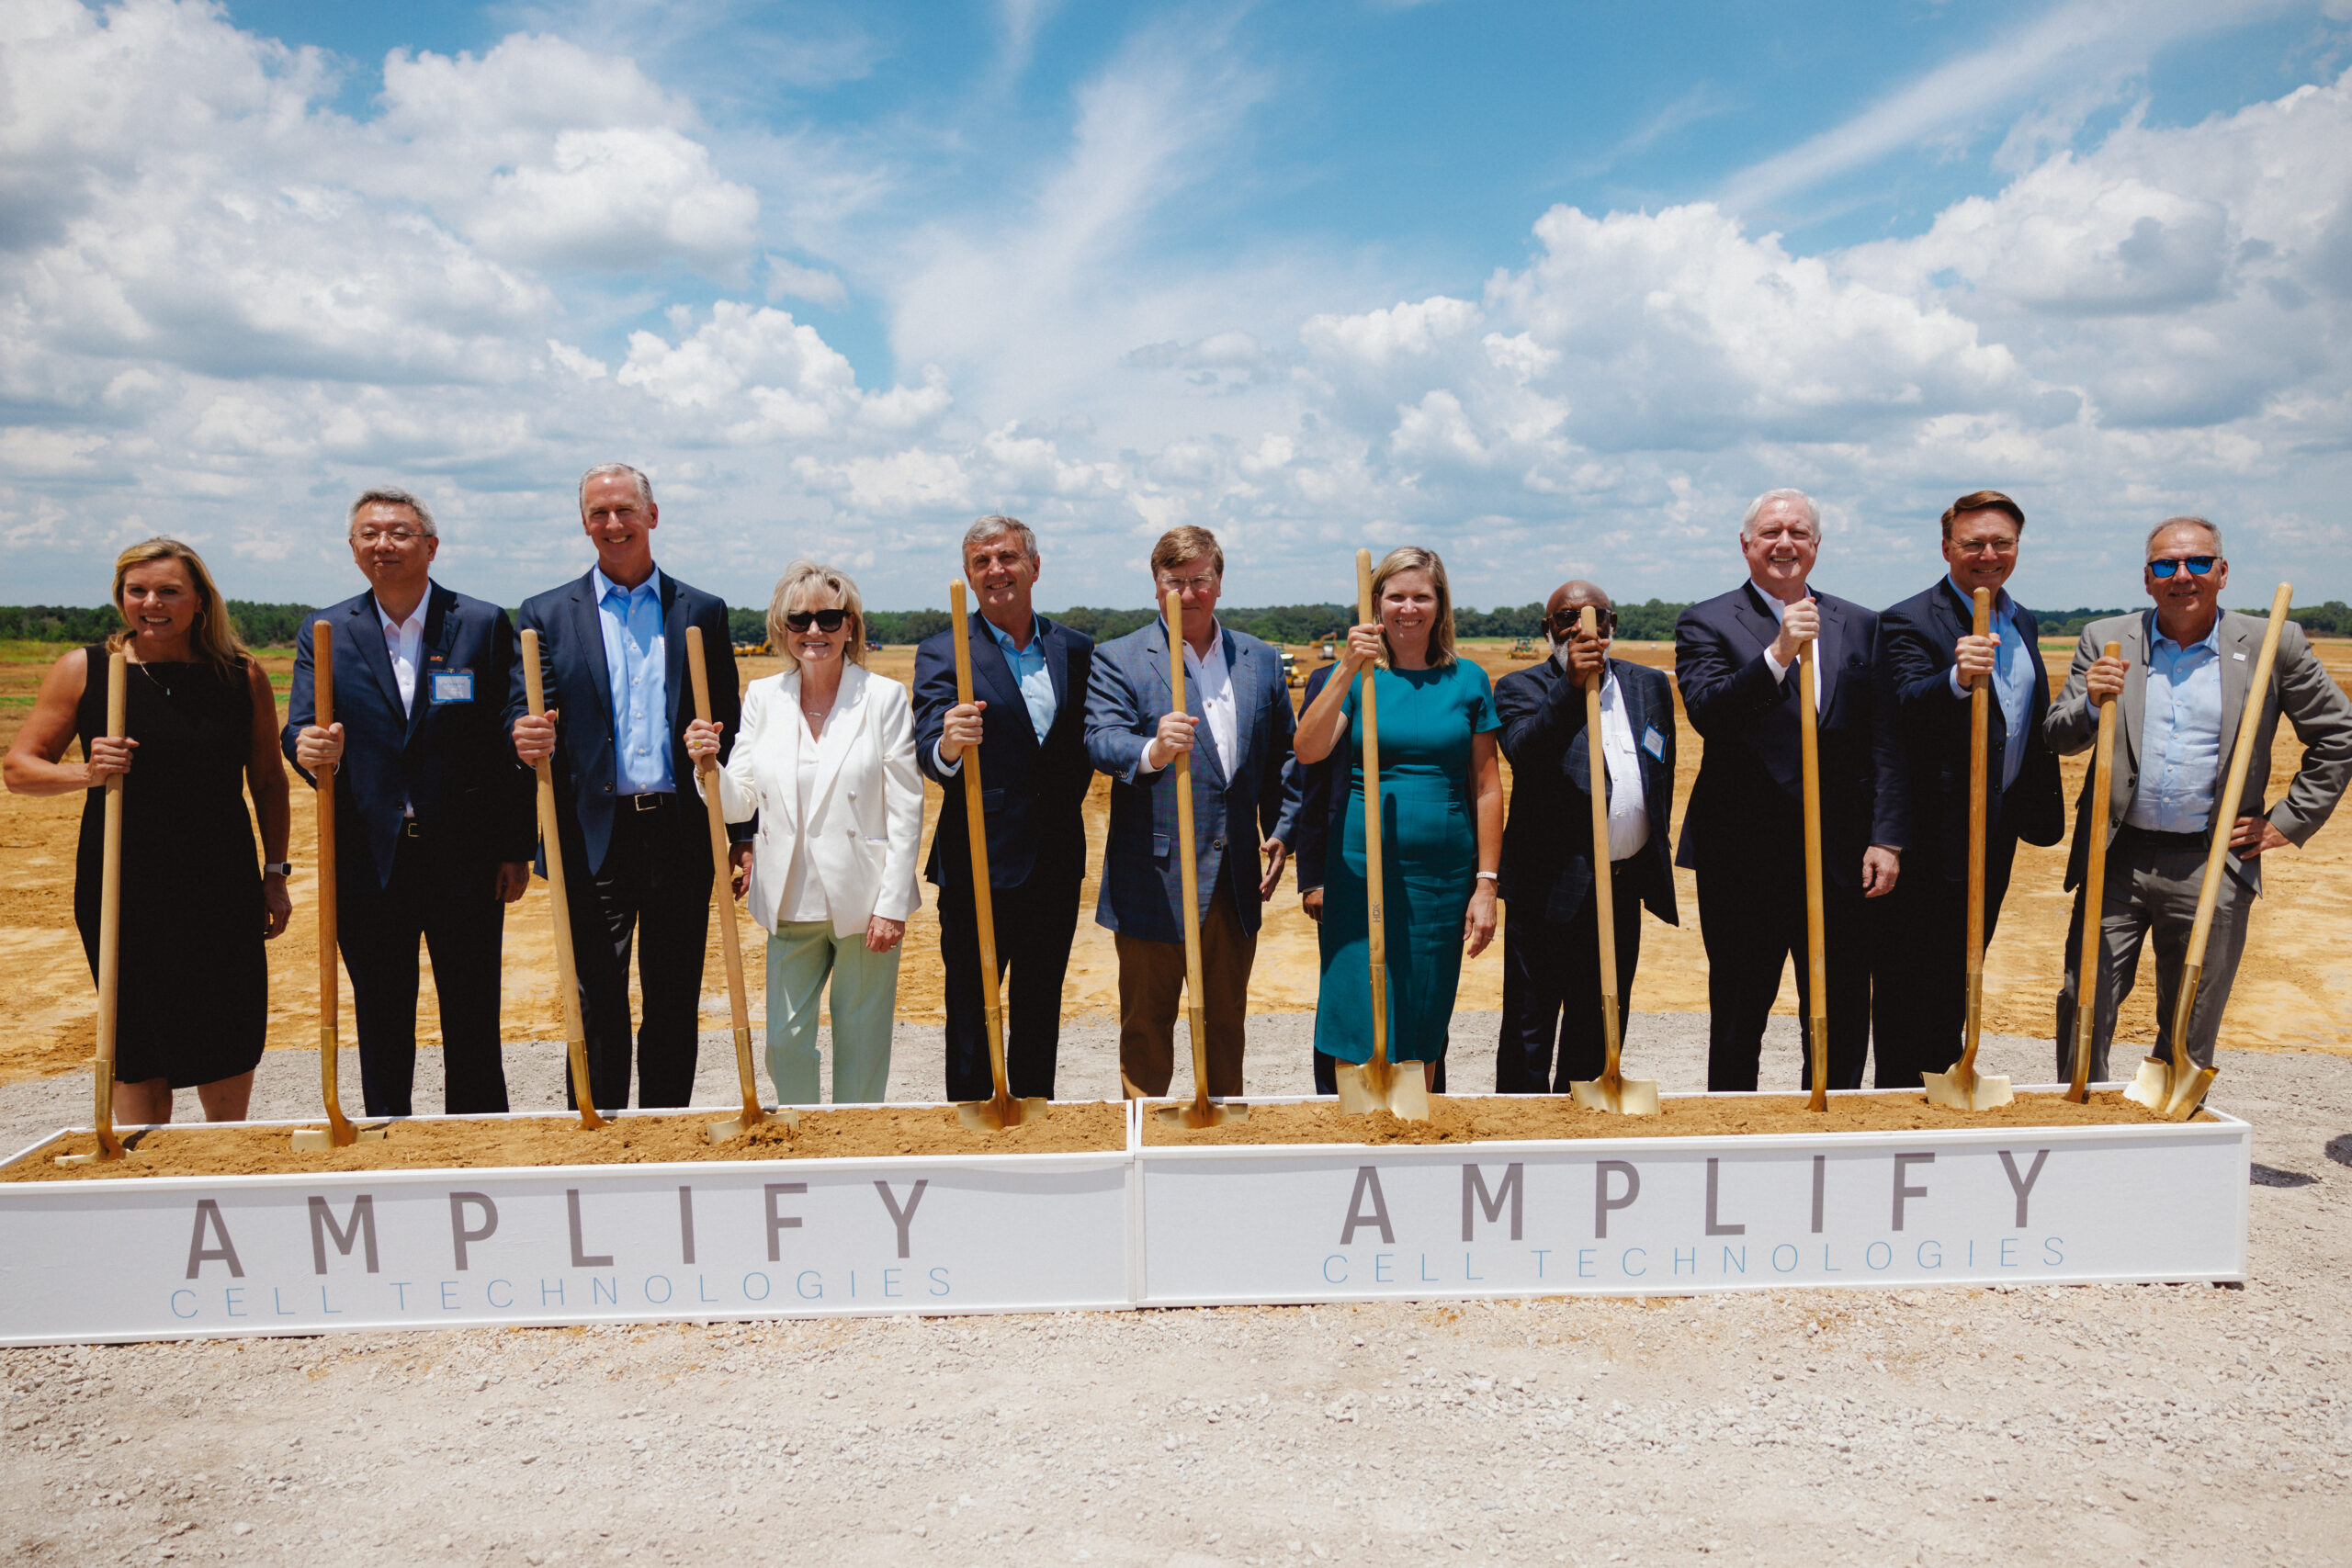 Amplify Begins Mississippi Battery Plant Construction